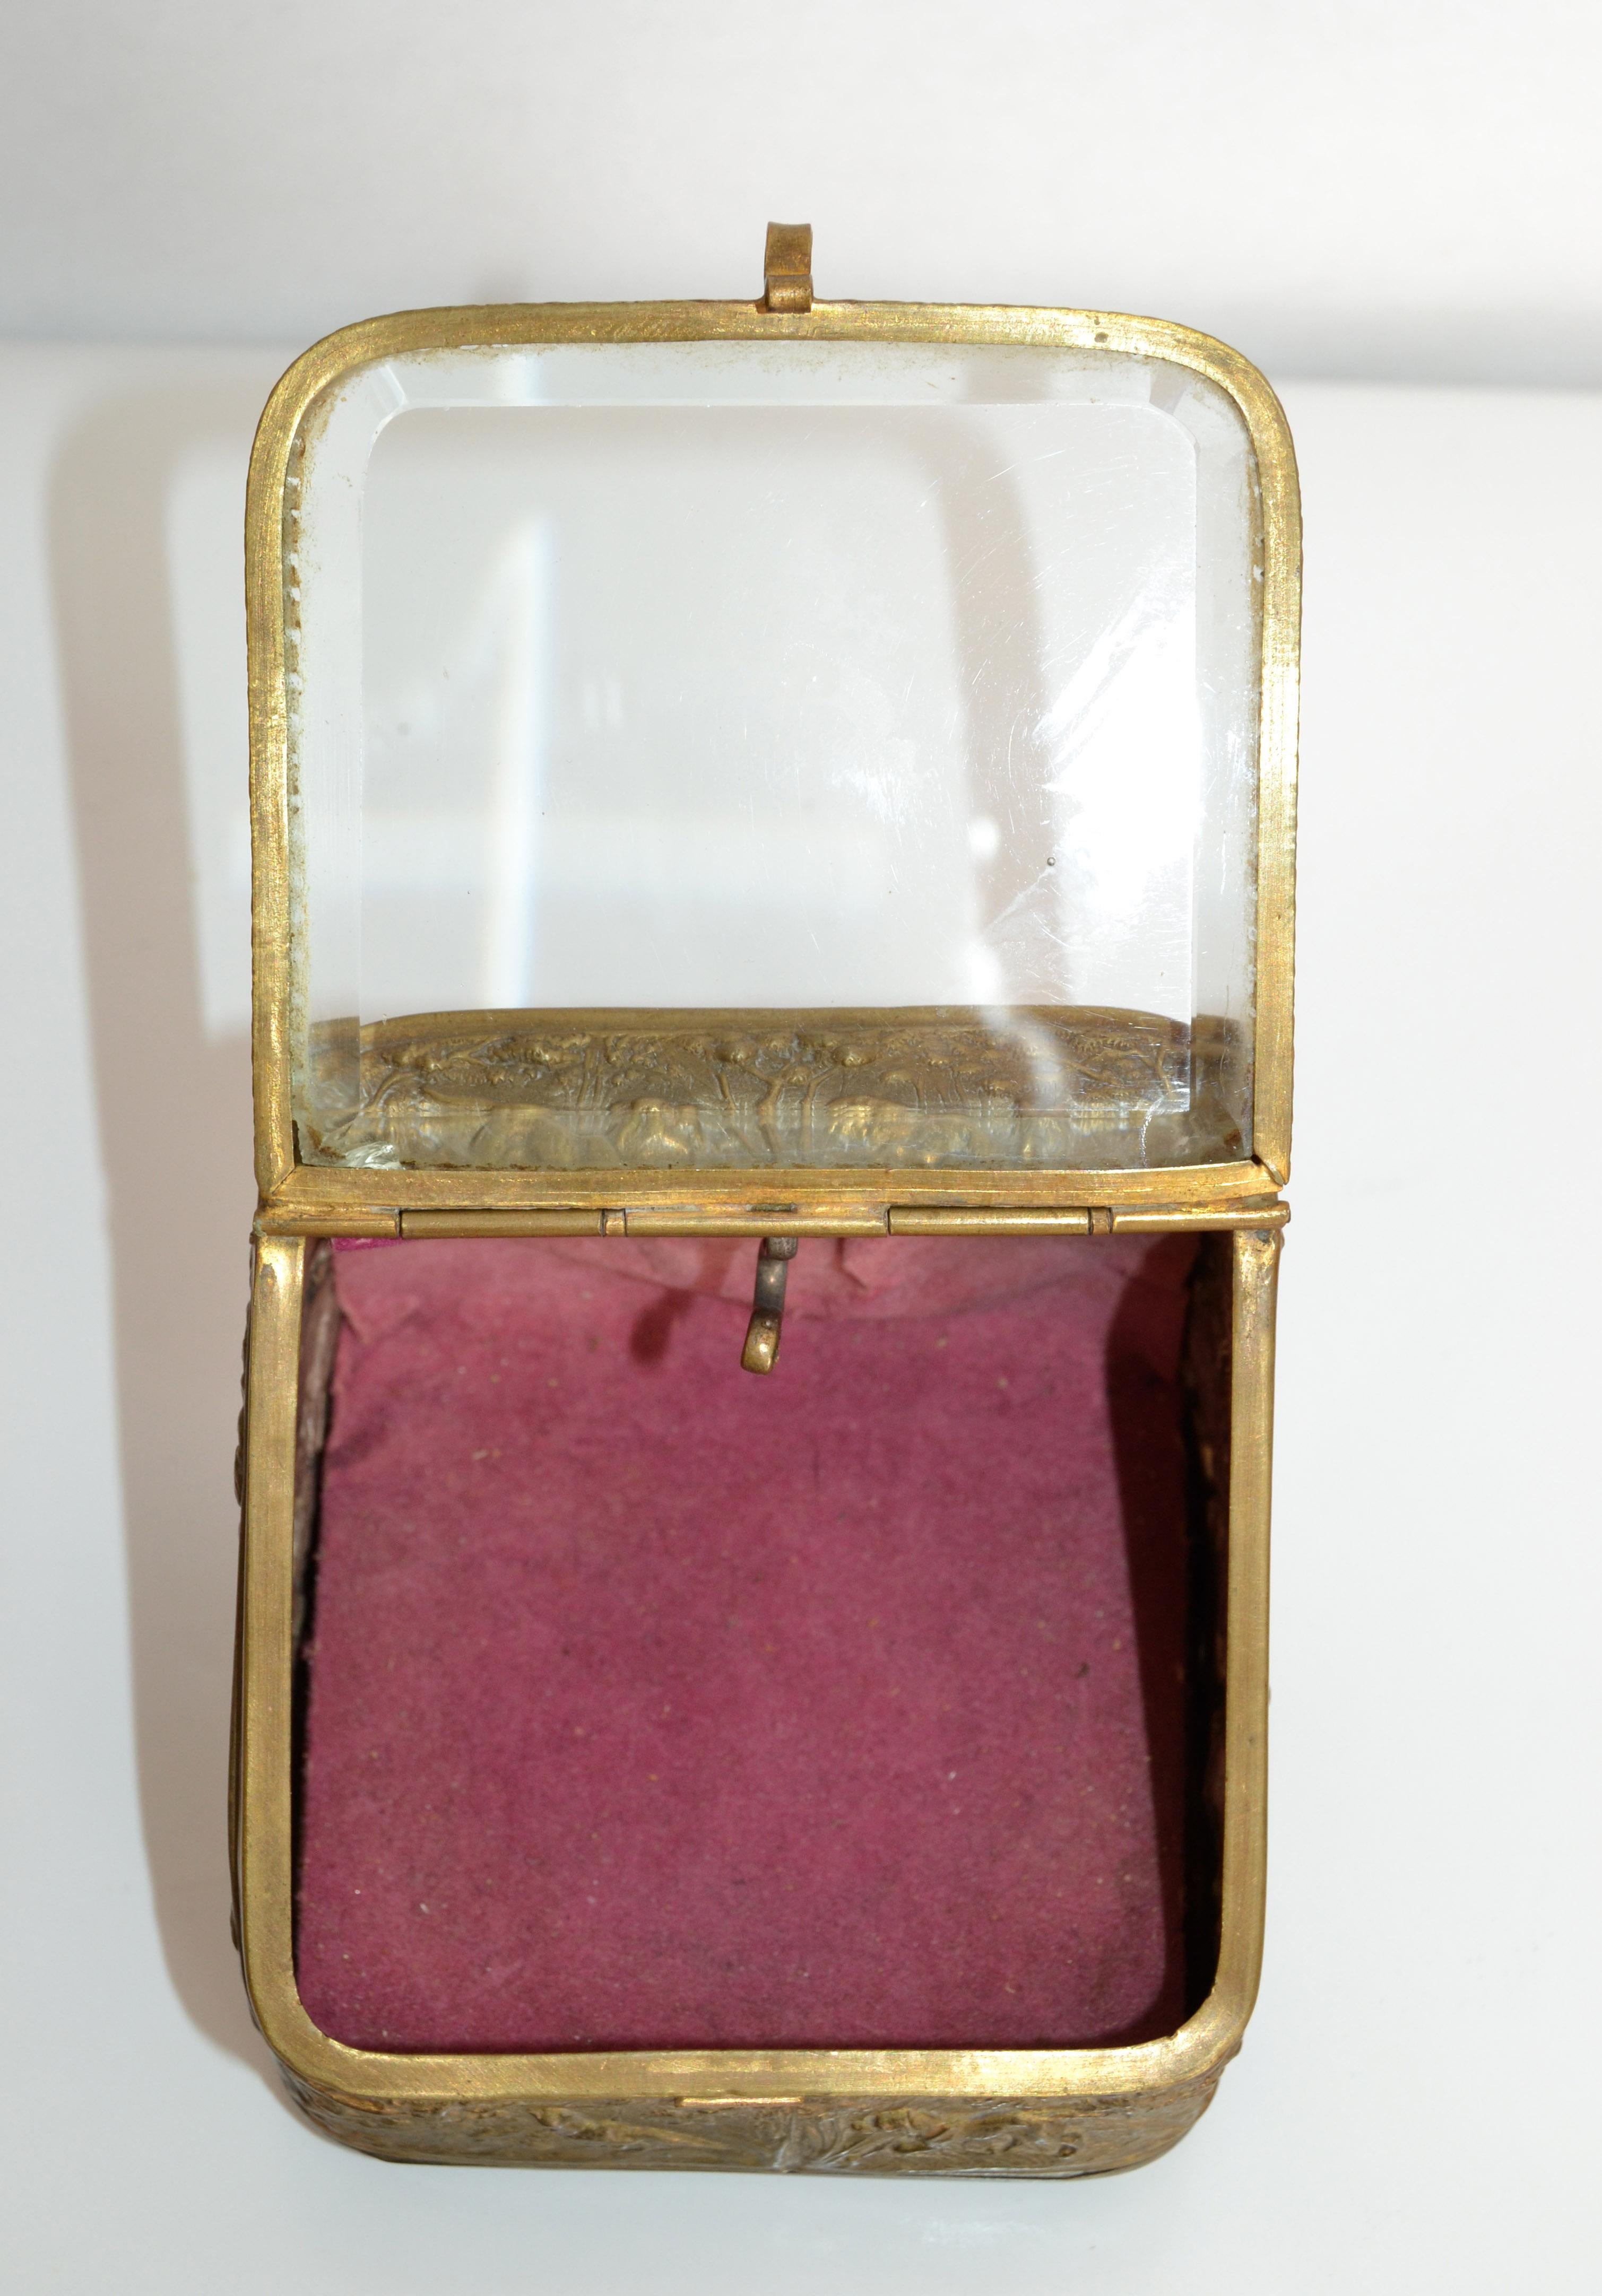 Antique French Napoleon III Era Pocket Watch Display Casket Box Hunt Theme Boar For Sale 2